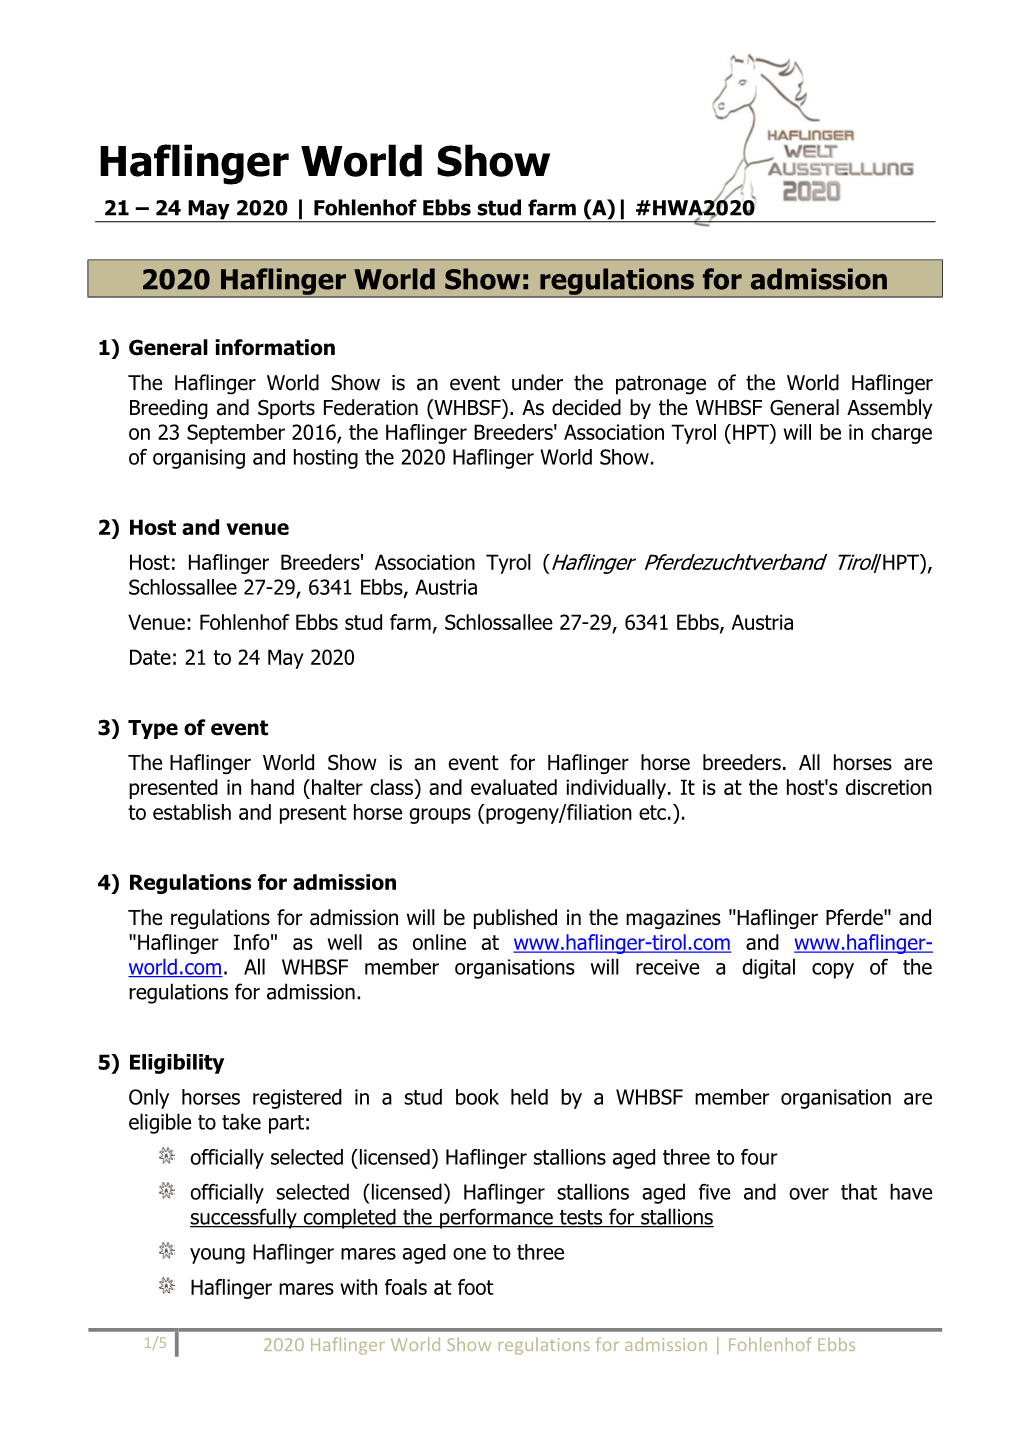 Haflinger World Show 21 – 24 May 2020 | Fohlenhof Ebbs Stud Farm (A)| #HWA2020